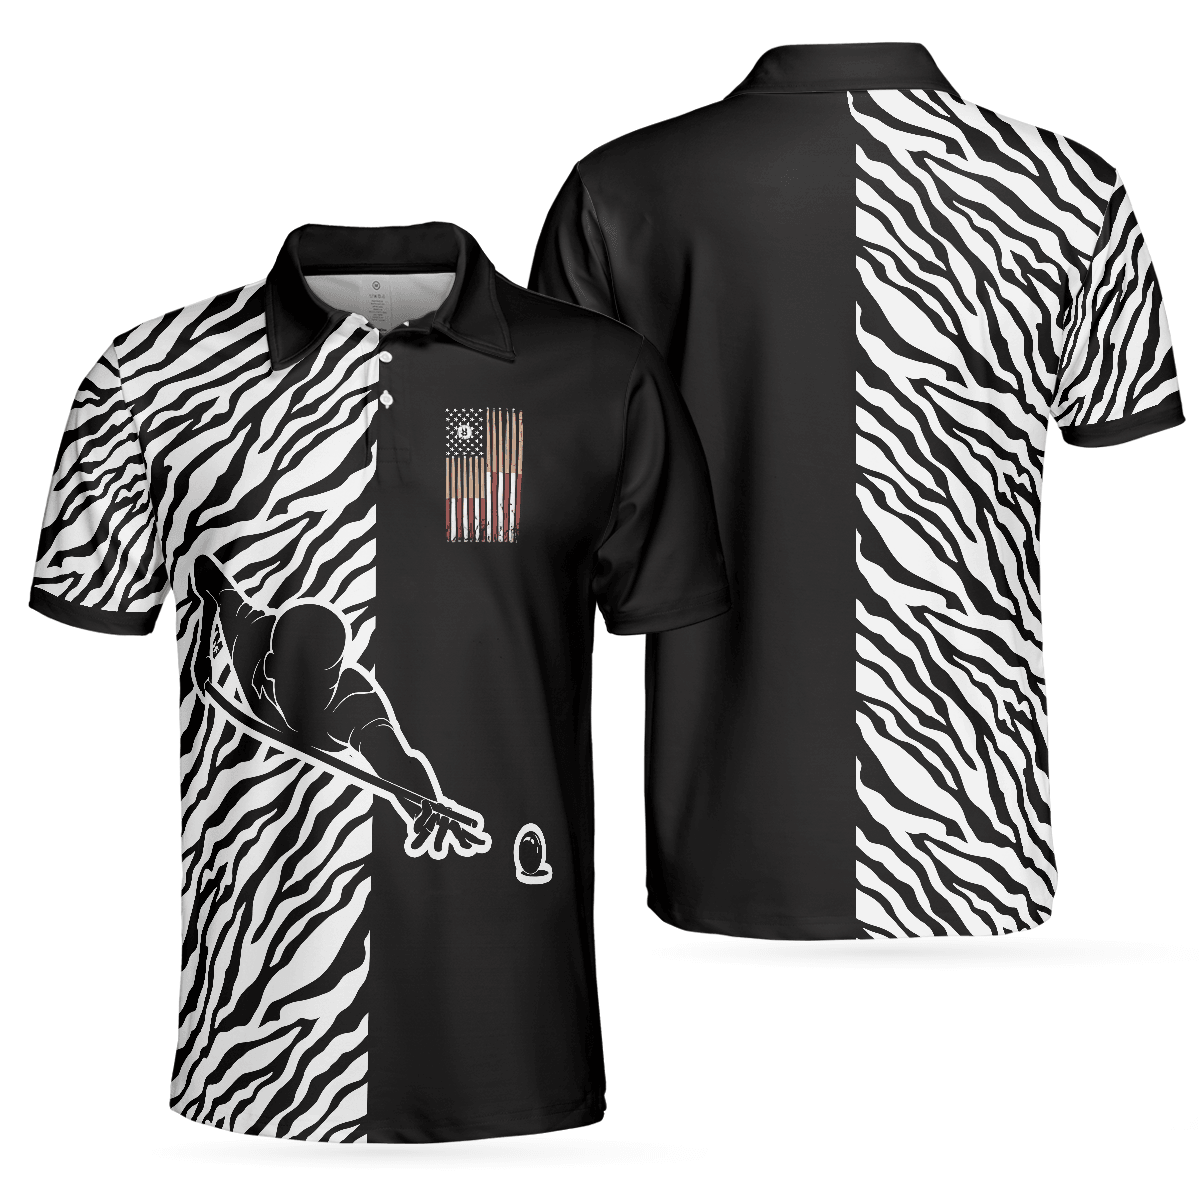 Men Polo Shirt - Billiards Zebra Polo Shirt, Cool Billiards Polo Shirt With Zebra Pattern, Best Pool Shirt For Pool Players - Amzanimalsgift